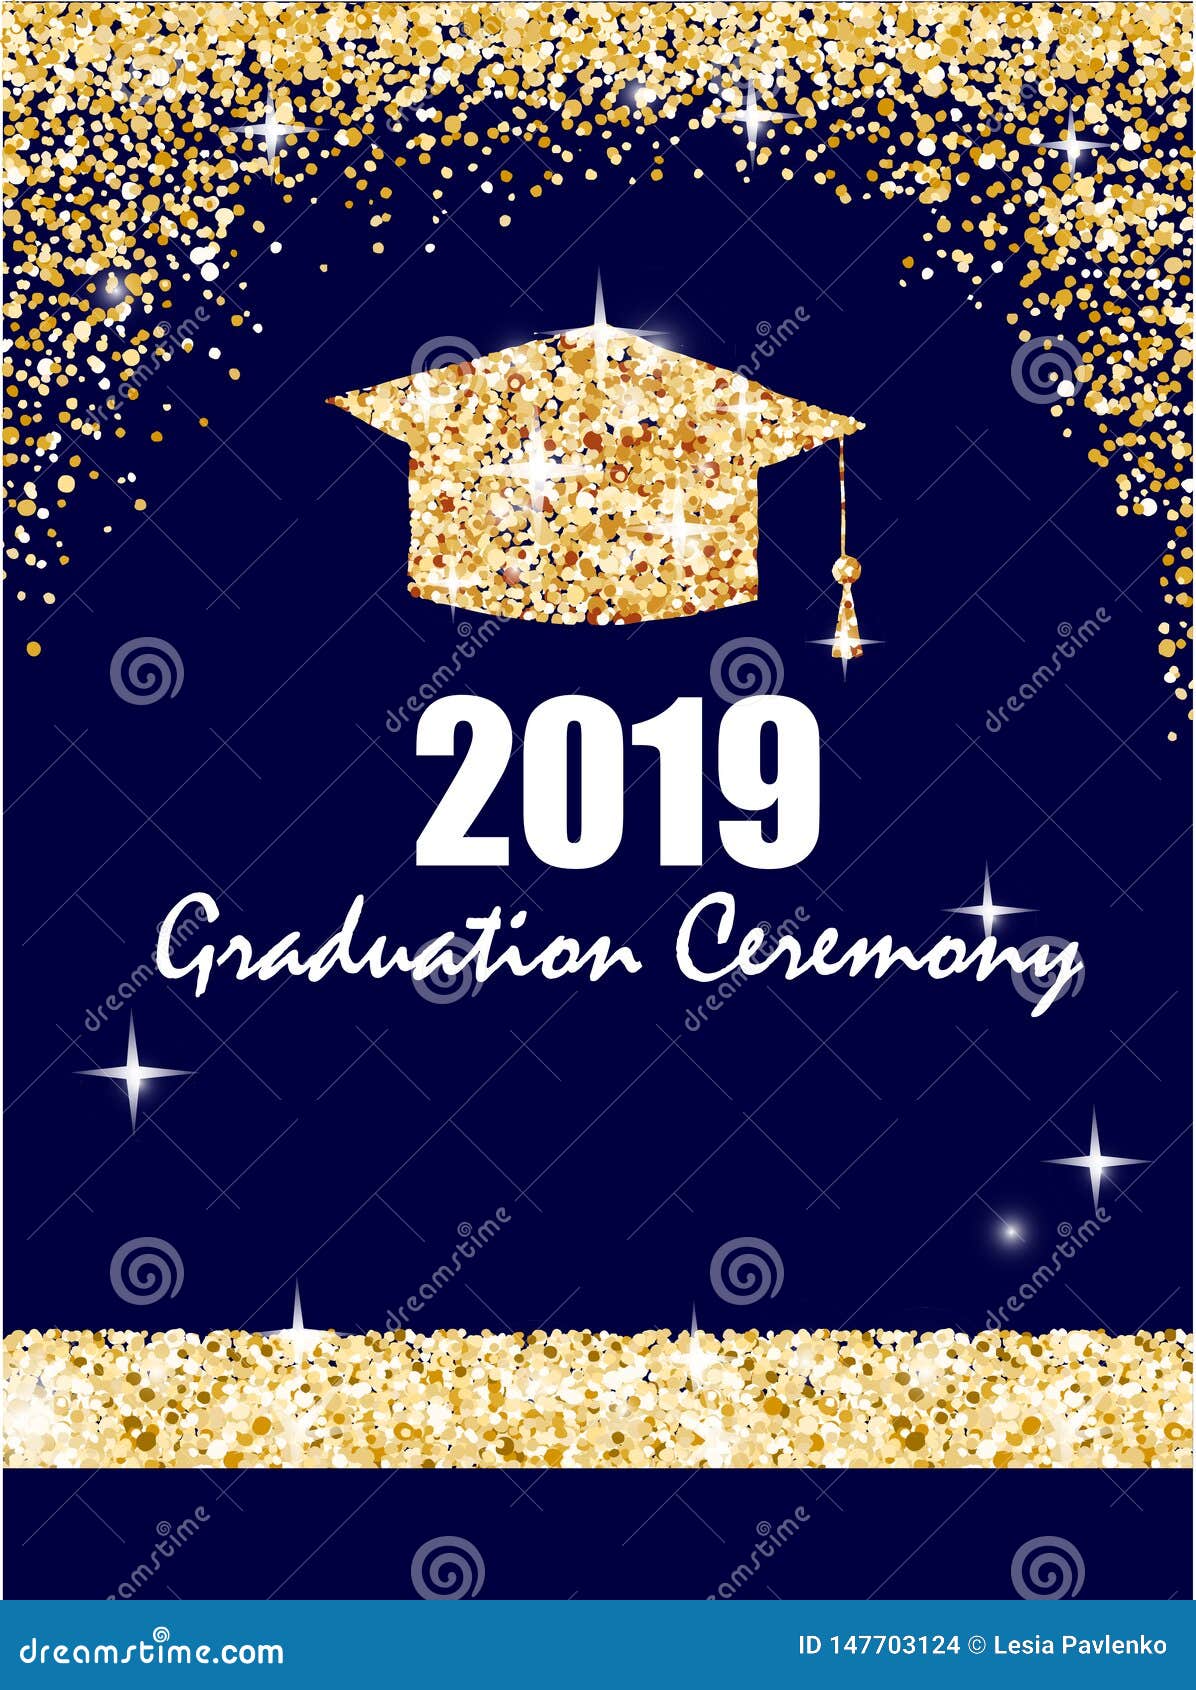 Graduation Ceremony Banner with Golden Graduate Cap, Glitter Dots on a Dark  Blue Background. Congratulation Graduates Stock Vector - Illustration of  college, ceremony: 147703124